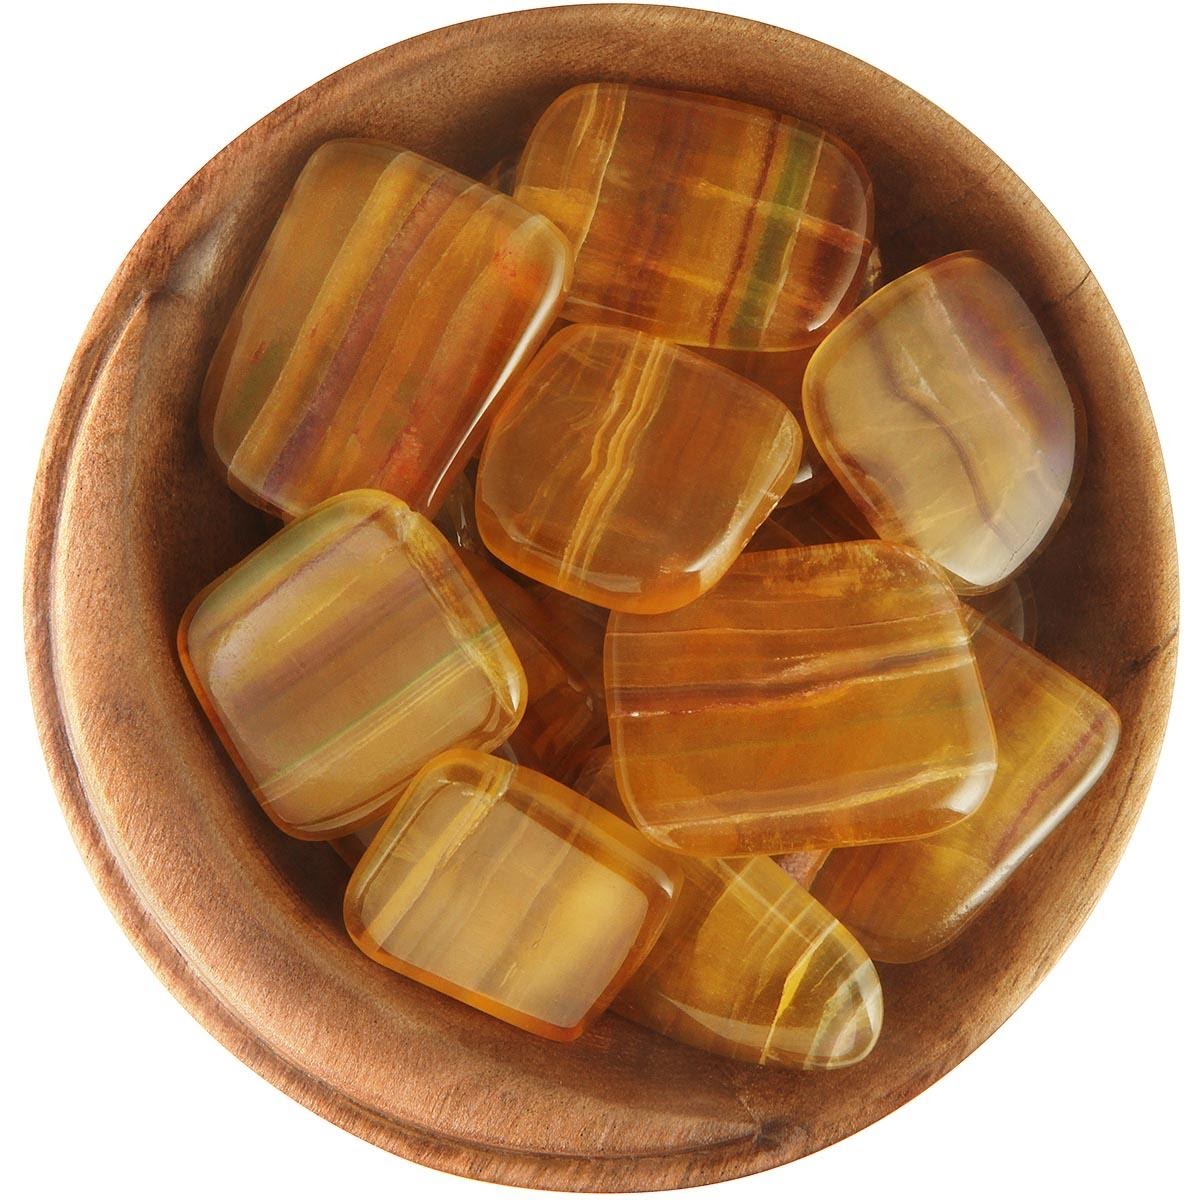 Bowl of yellow fluorite stones